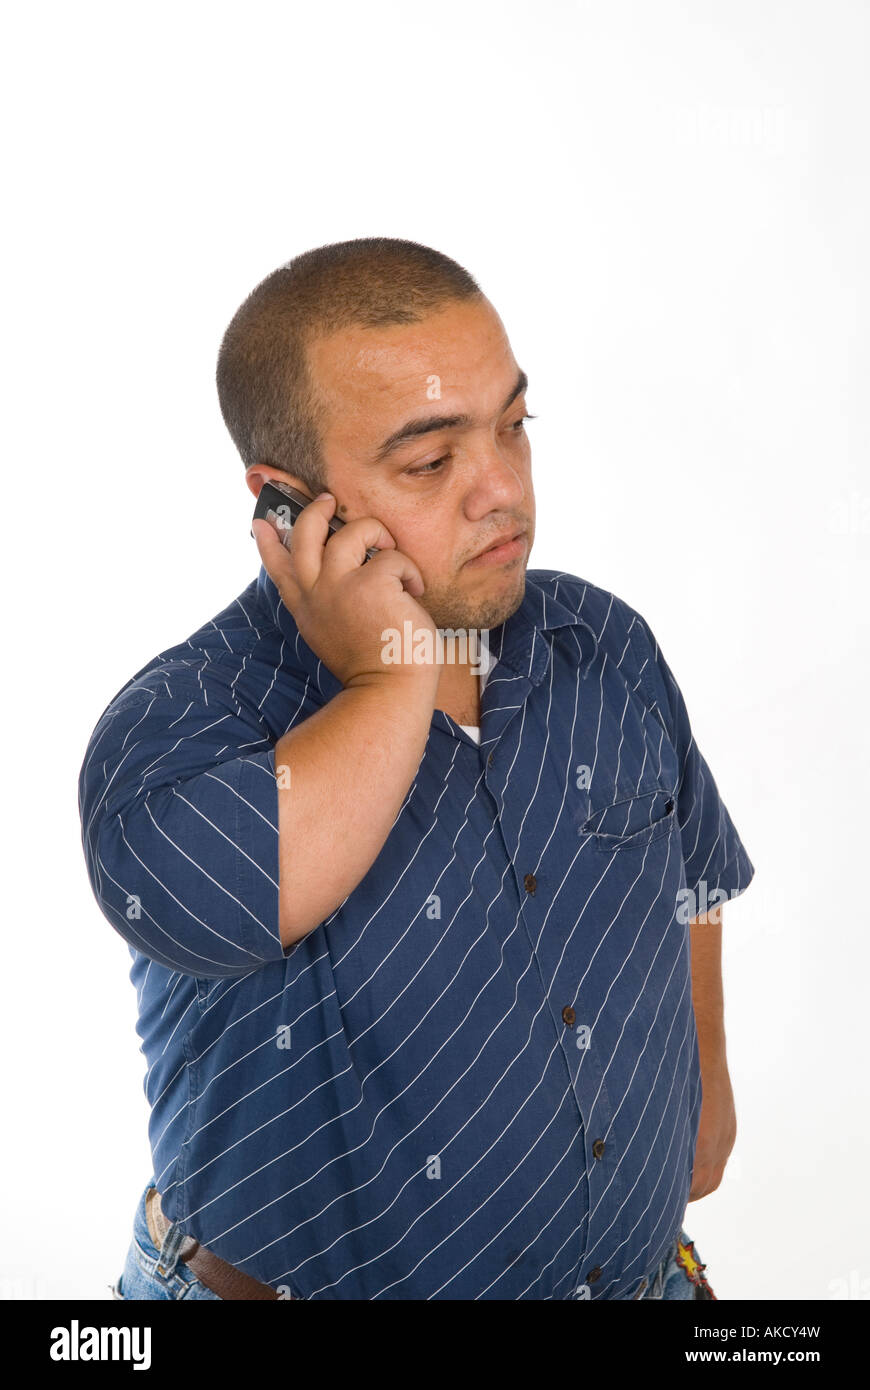 Midget man talking on mobile cell phone Stock Photo